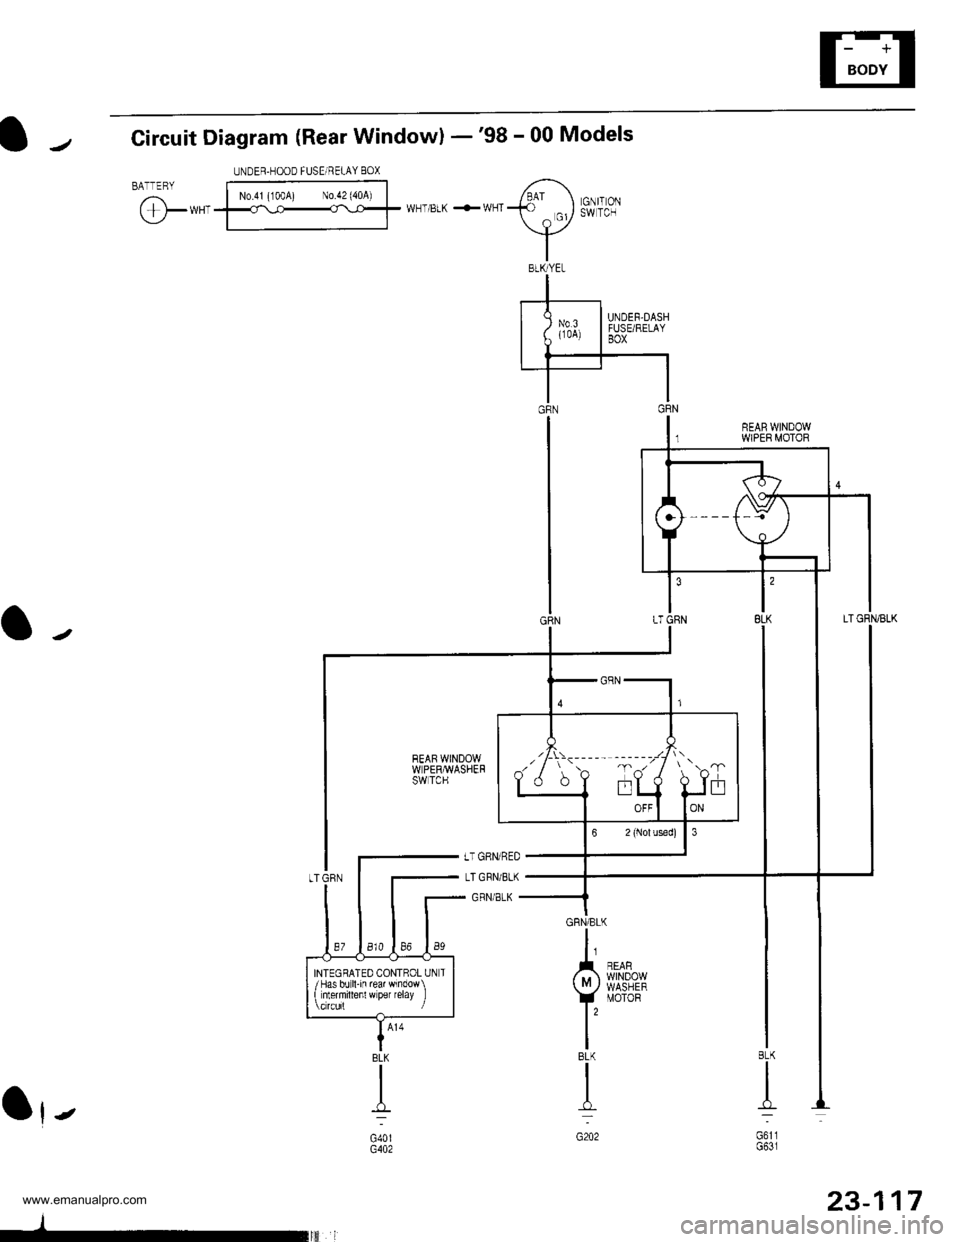 HONDA CR-V 2000 RD1-RD3 / 1.G Workshop Manual 
Circuit Diagram (Rear Windowl -98 - 00 Models
BATTERYUNDER.HOOD FUSEi RELAY 80X
N0.41 (100A) N0.42 (40A)
@*,WHT/BLK +WHTGNIT ONSW TCH
REAR WINDOWWPER MOTOR
Ot-
GRN/BLK
I
A n,$s".,,,
vil8t8E
IBLK
I